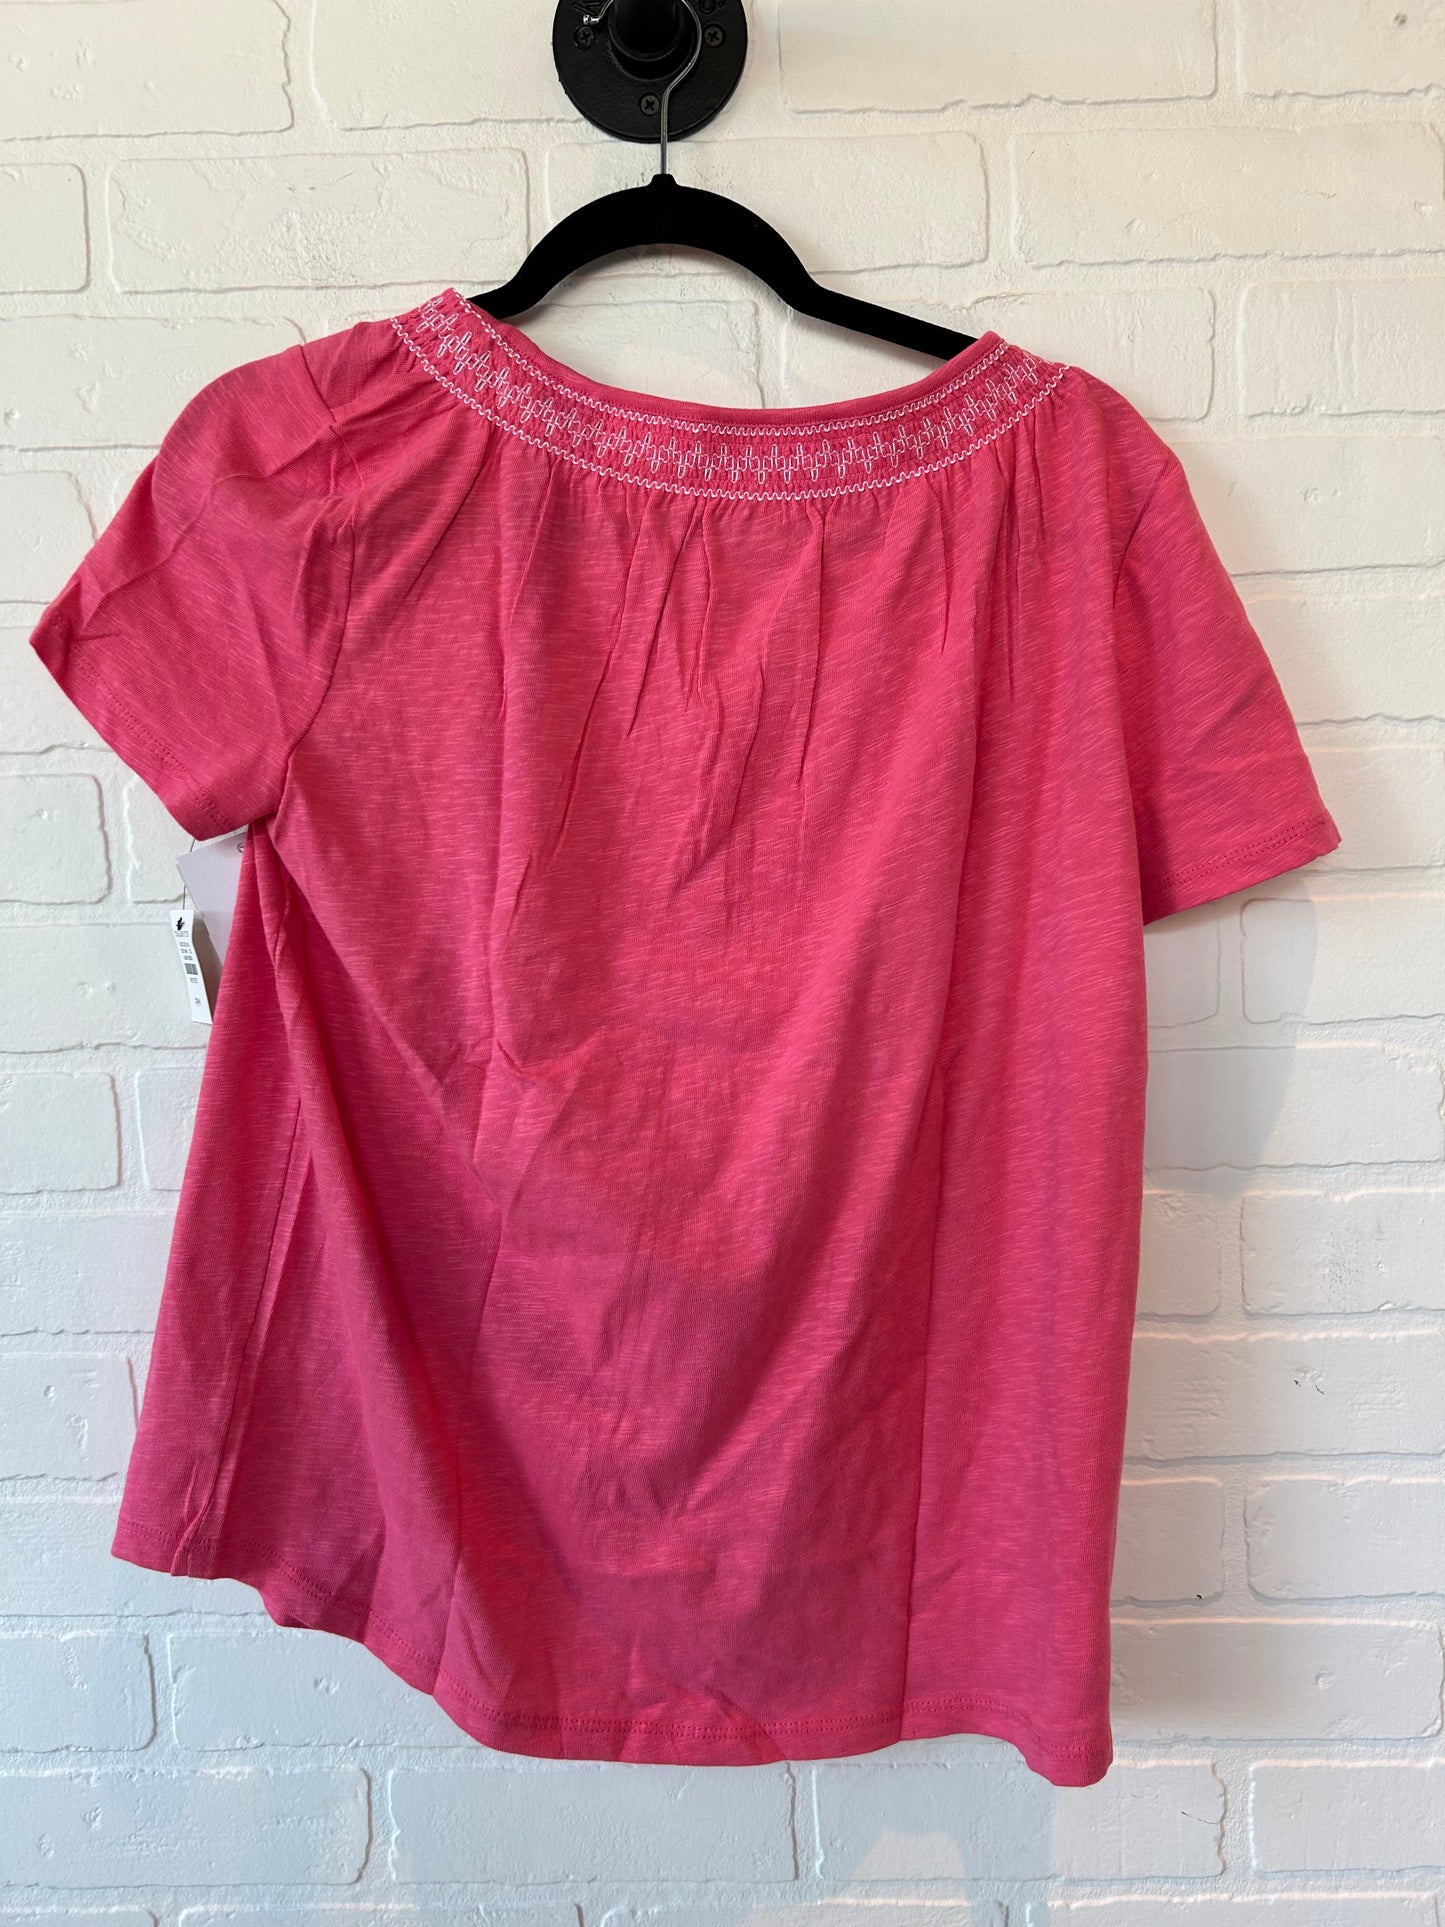 Pink & White Top Short Sleeve Basic Talbots, Size M